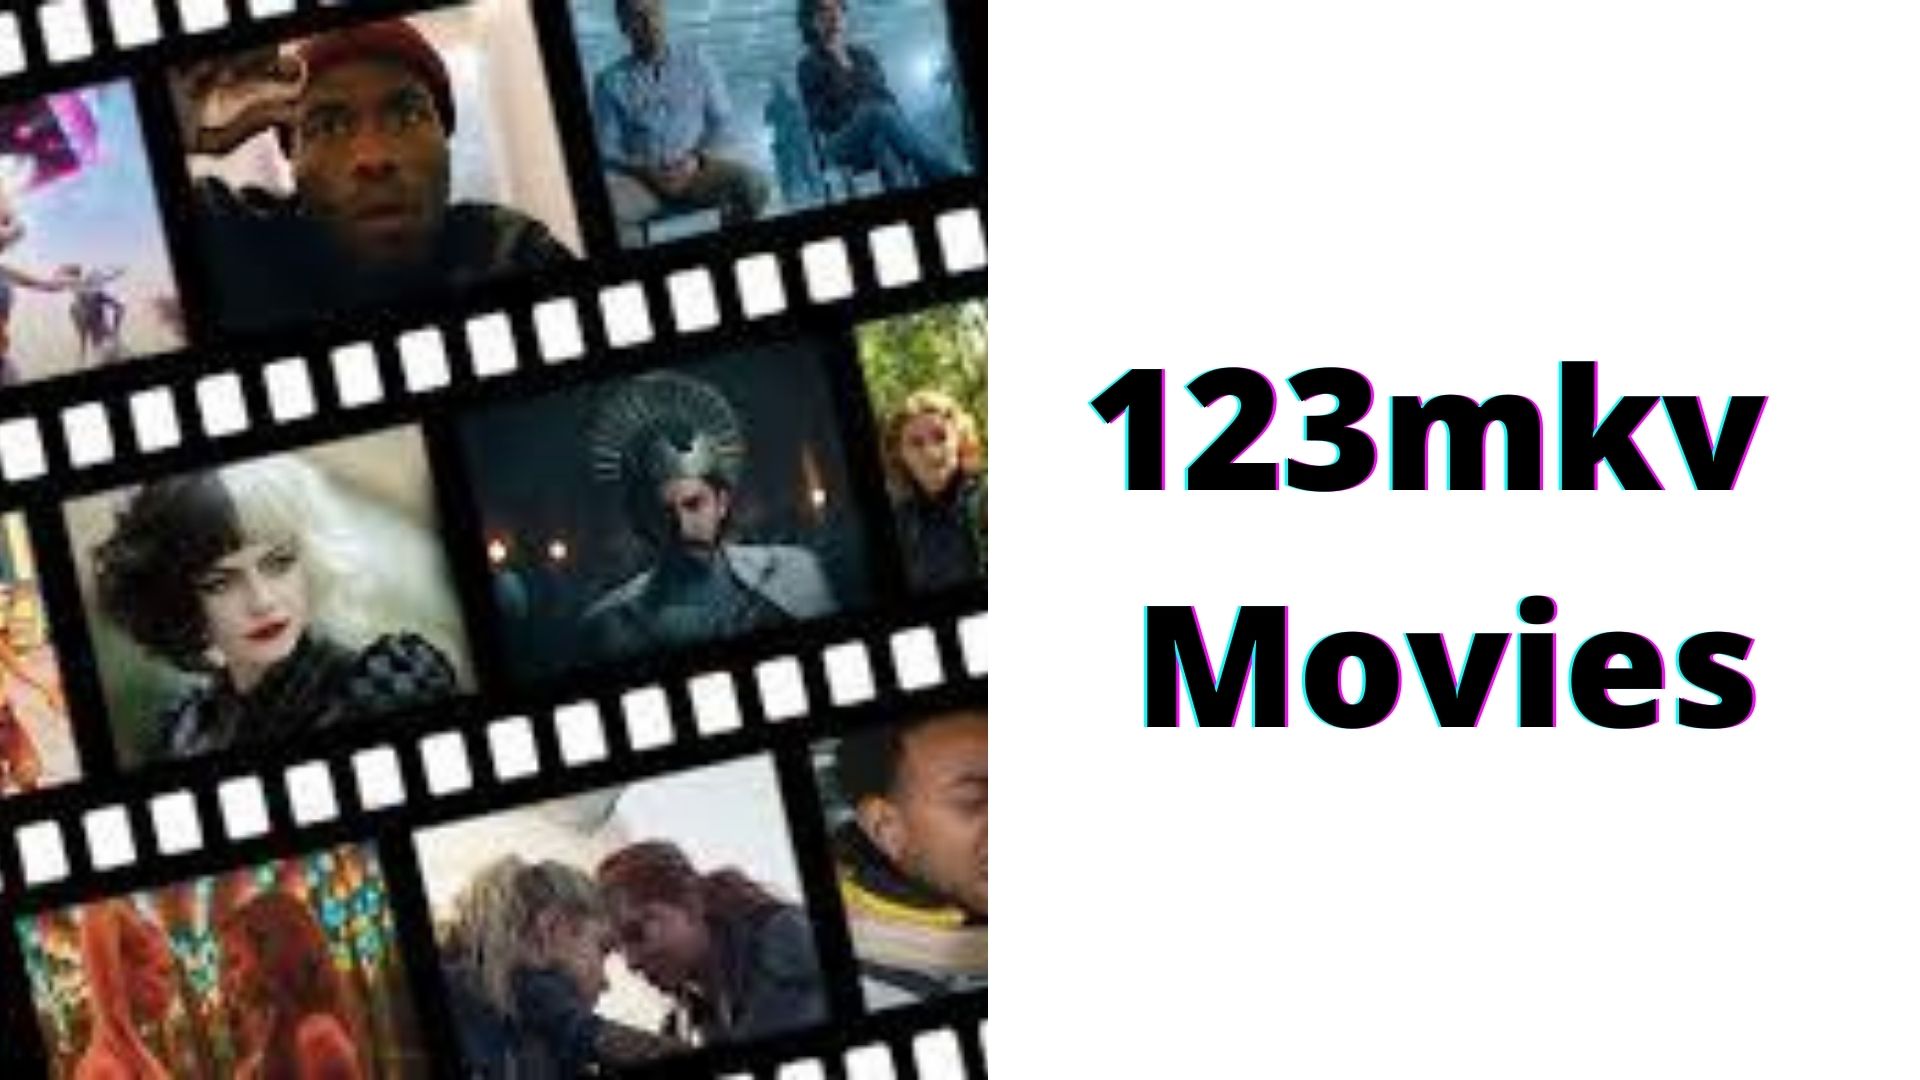 public/uploads/2022/01/123mkv-Movies.jpg